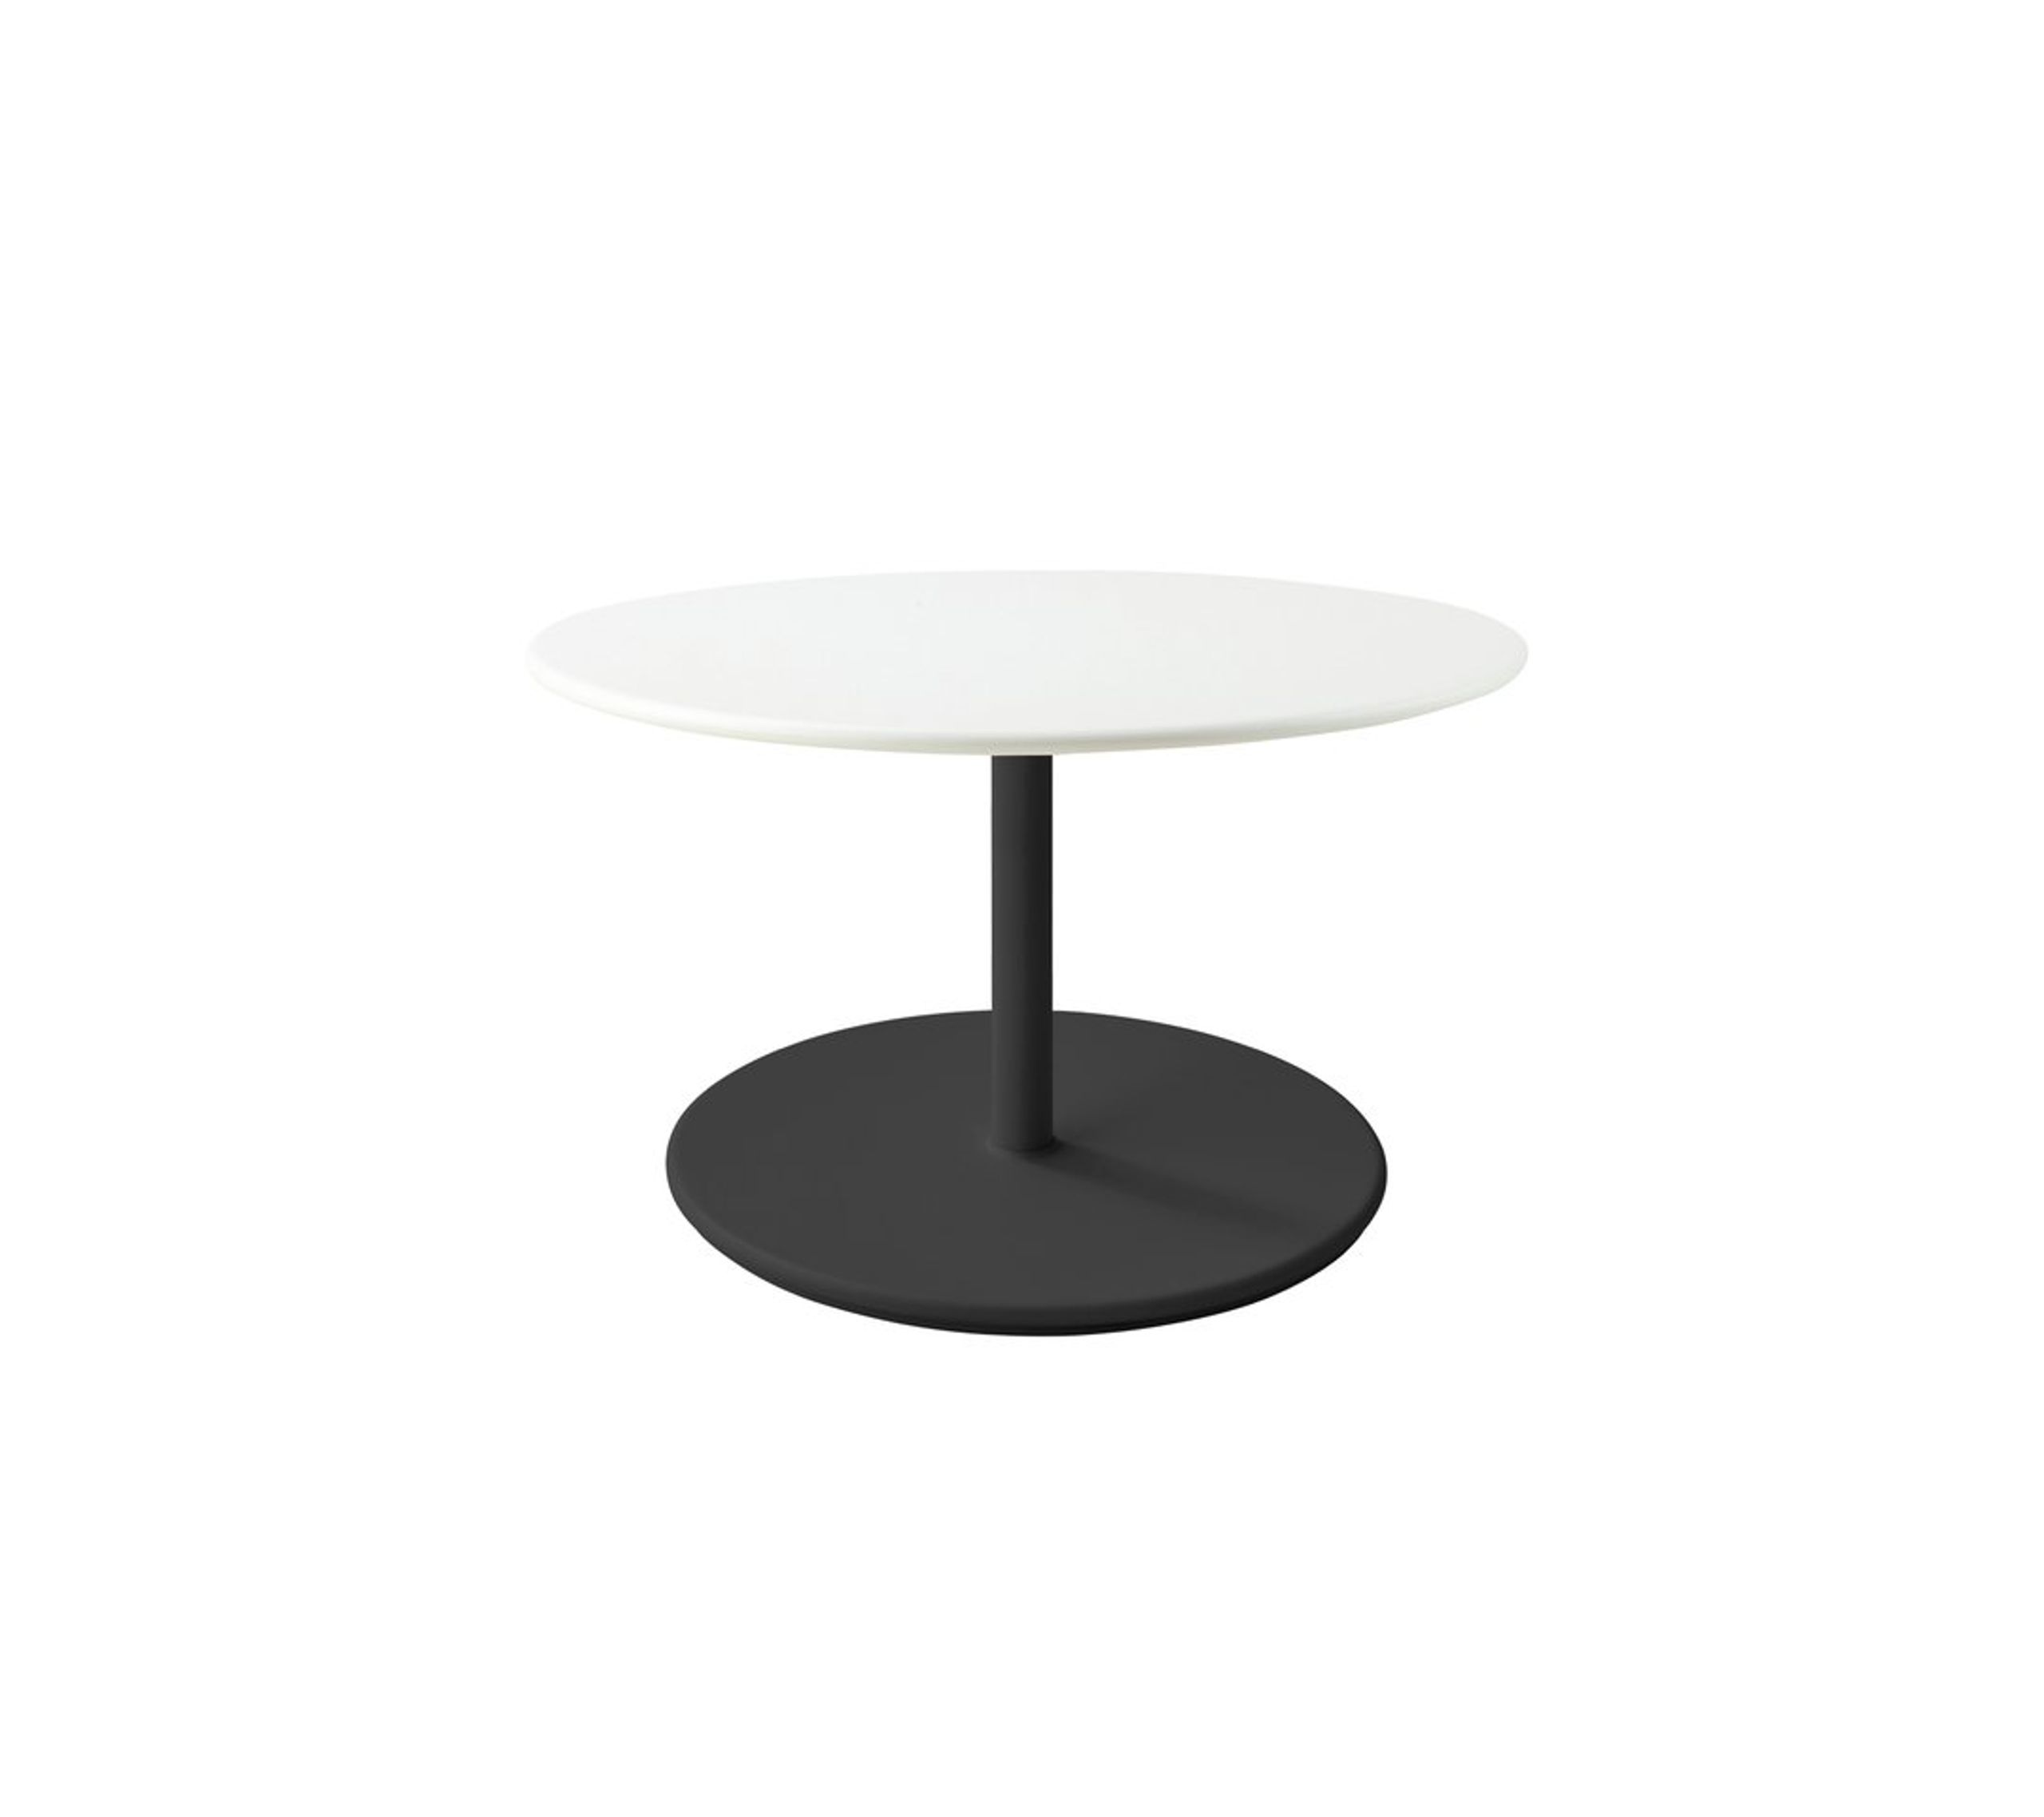 Cane-line - Coffee table - Go coffee table large - Ø80 - Frame: Lava Grey Aluminum / Tabletop: White Aluminum